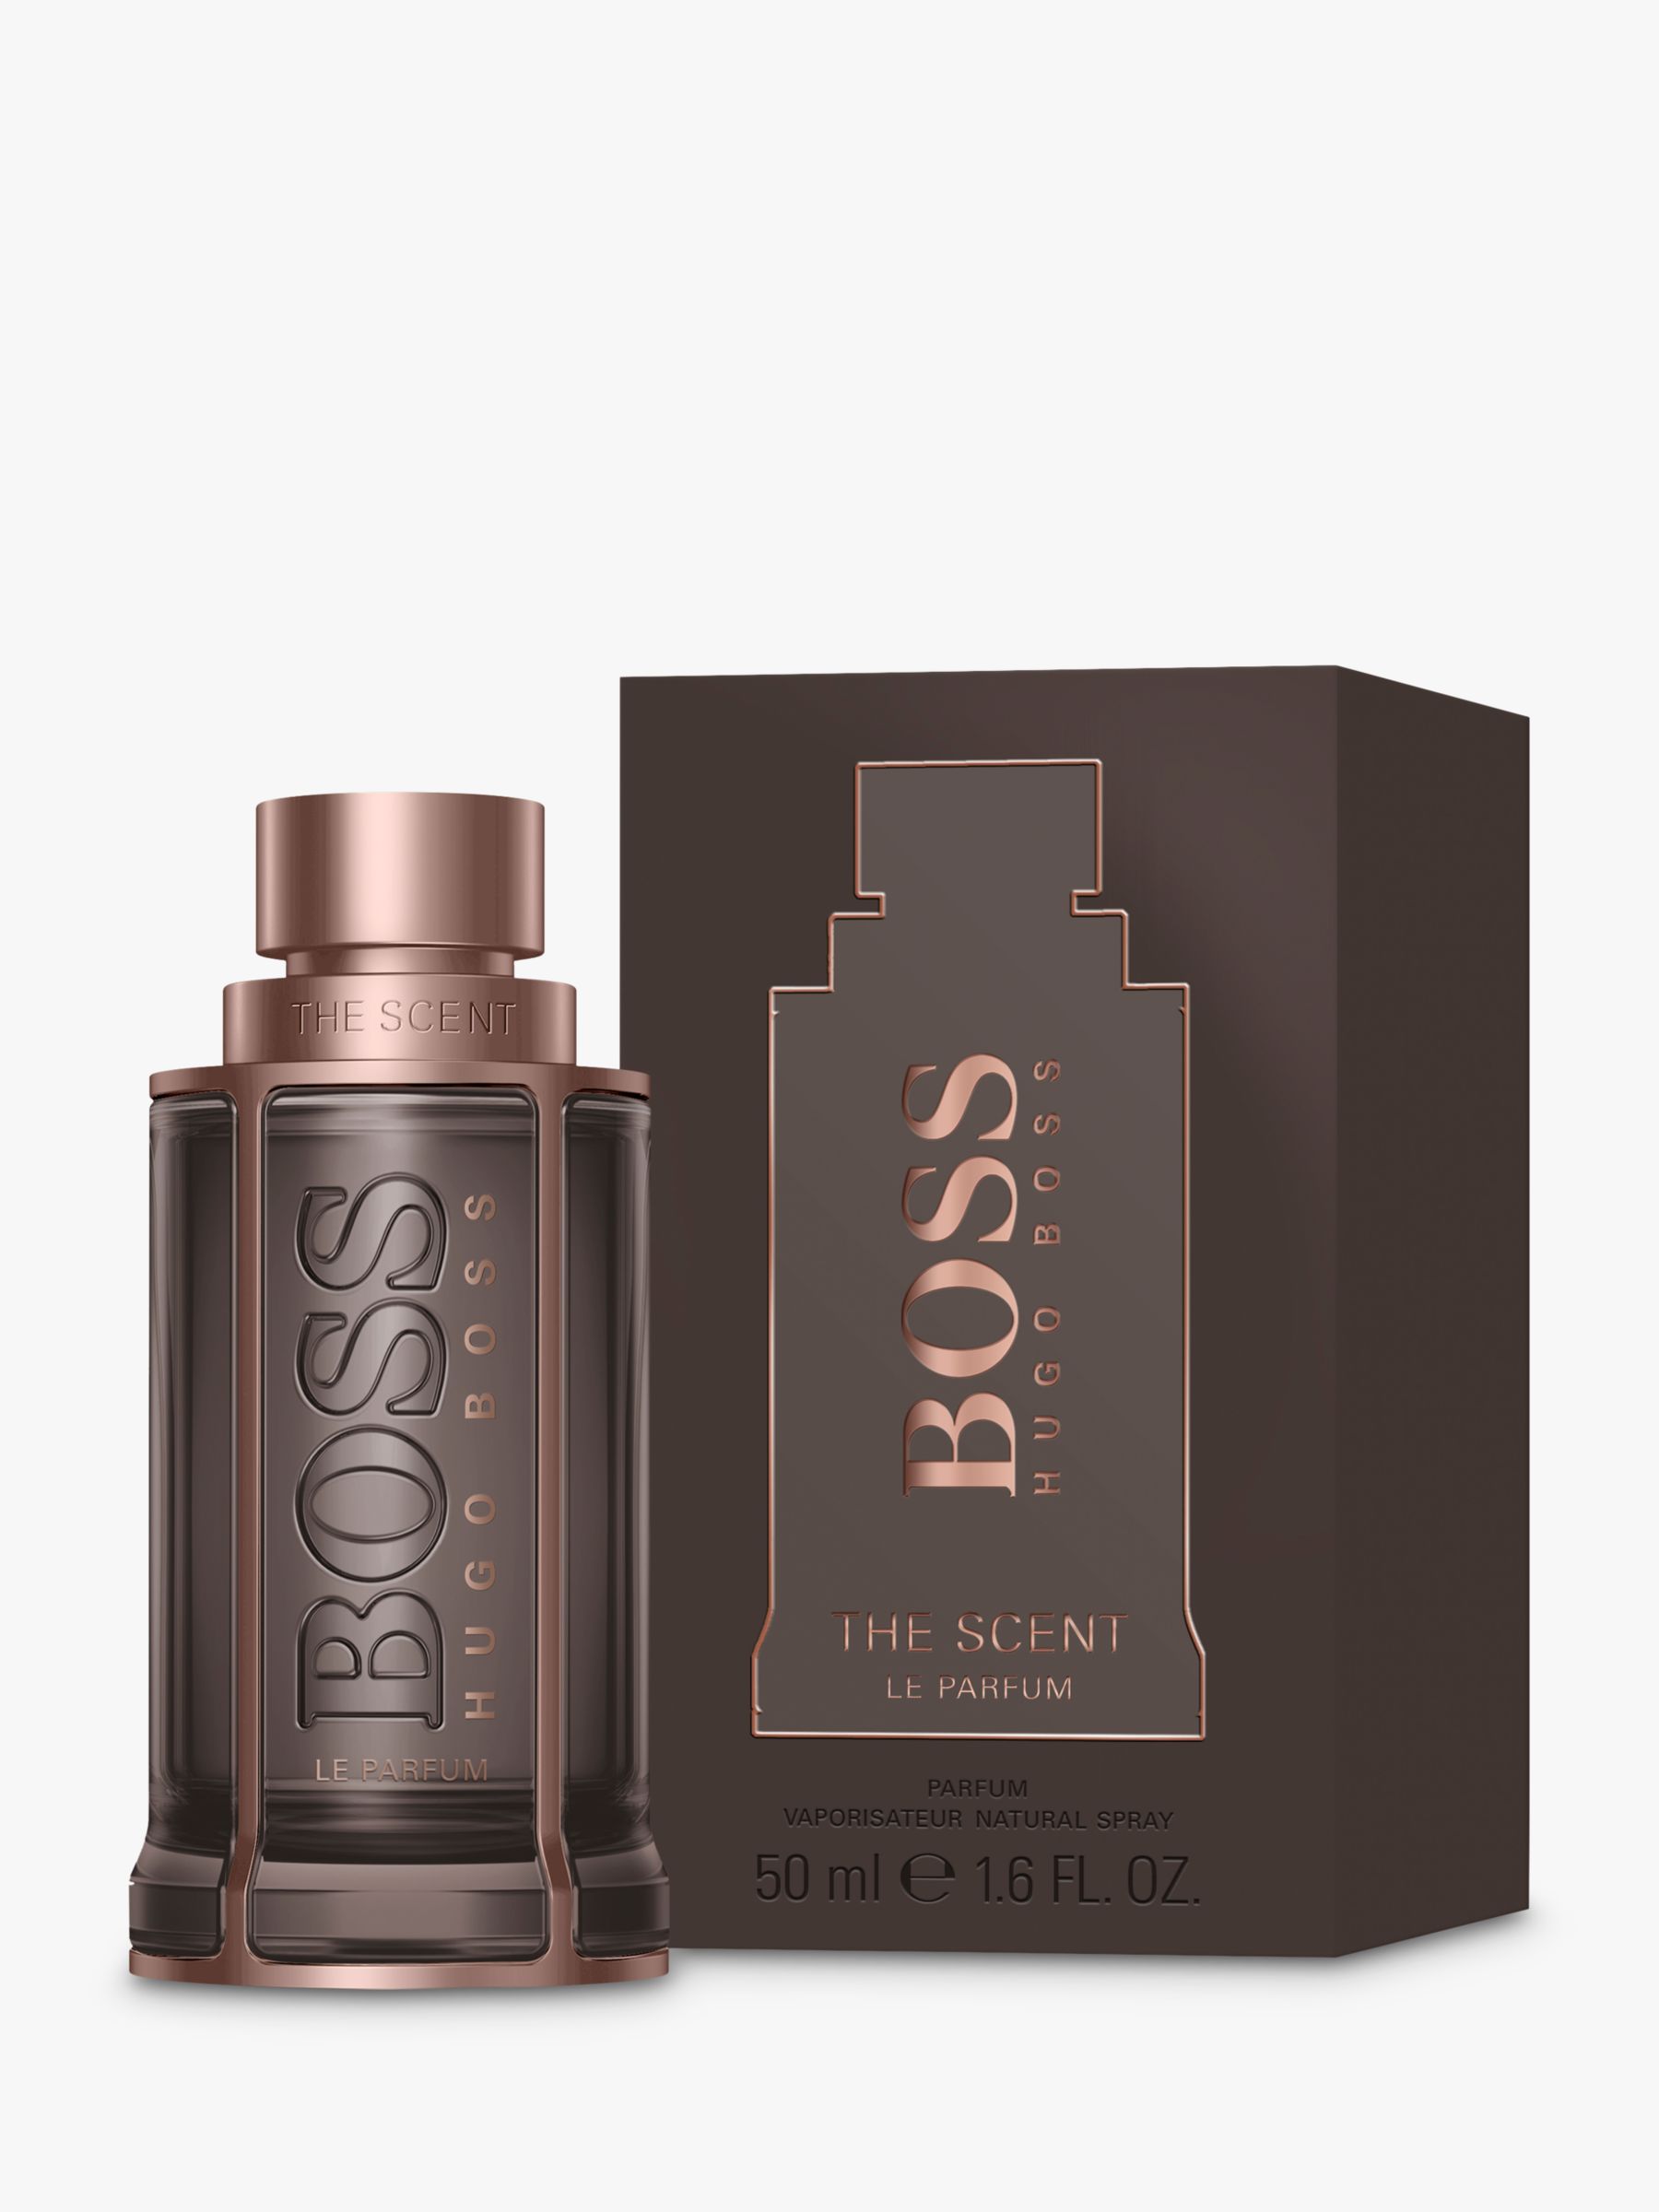 HUGO BOSS BOSS The Scent Le Parfum for Him, 50ml 2